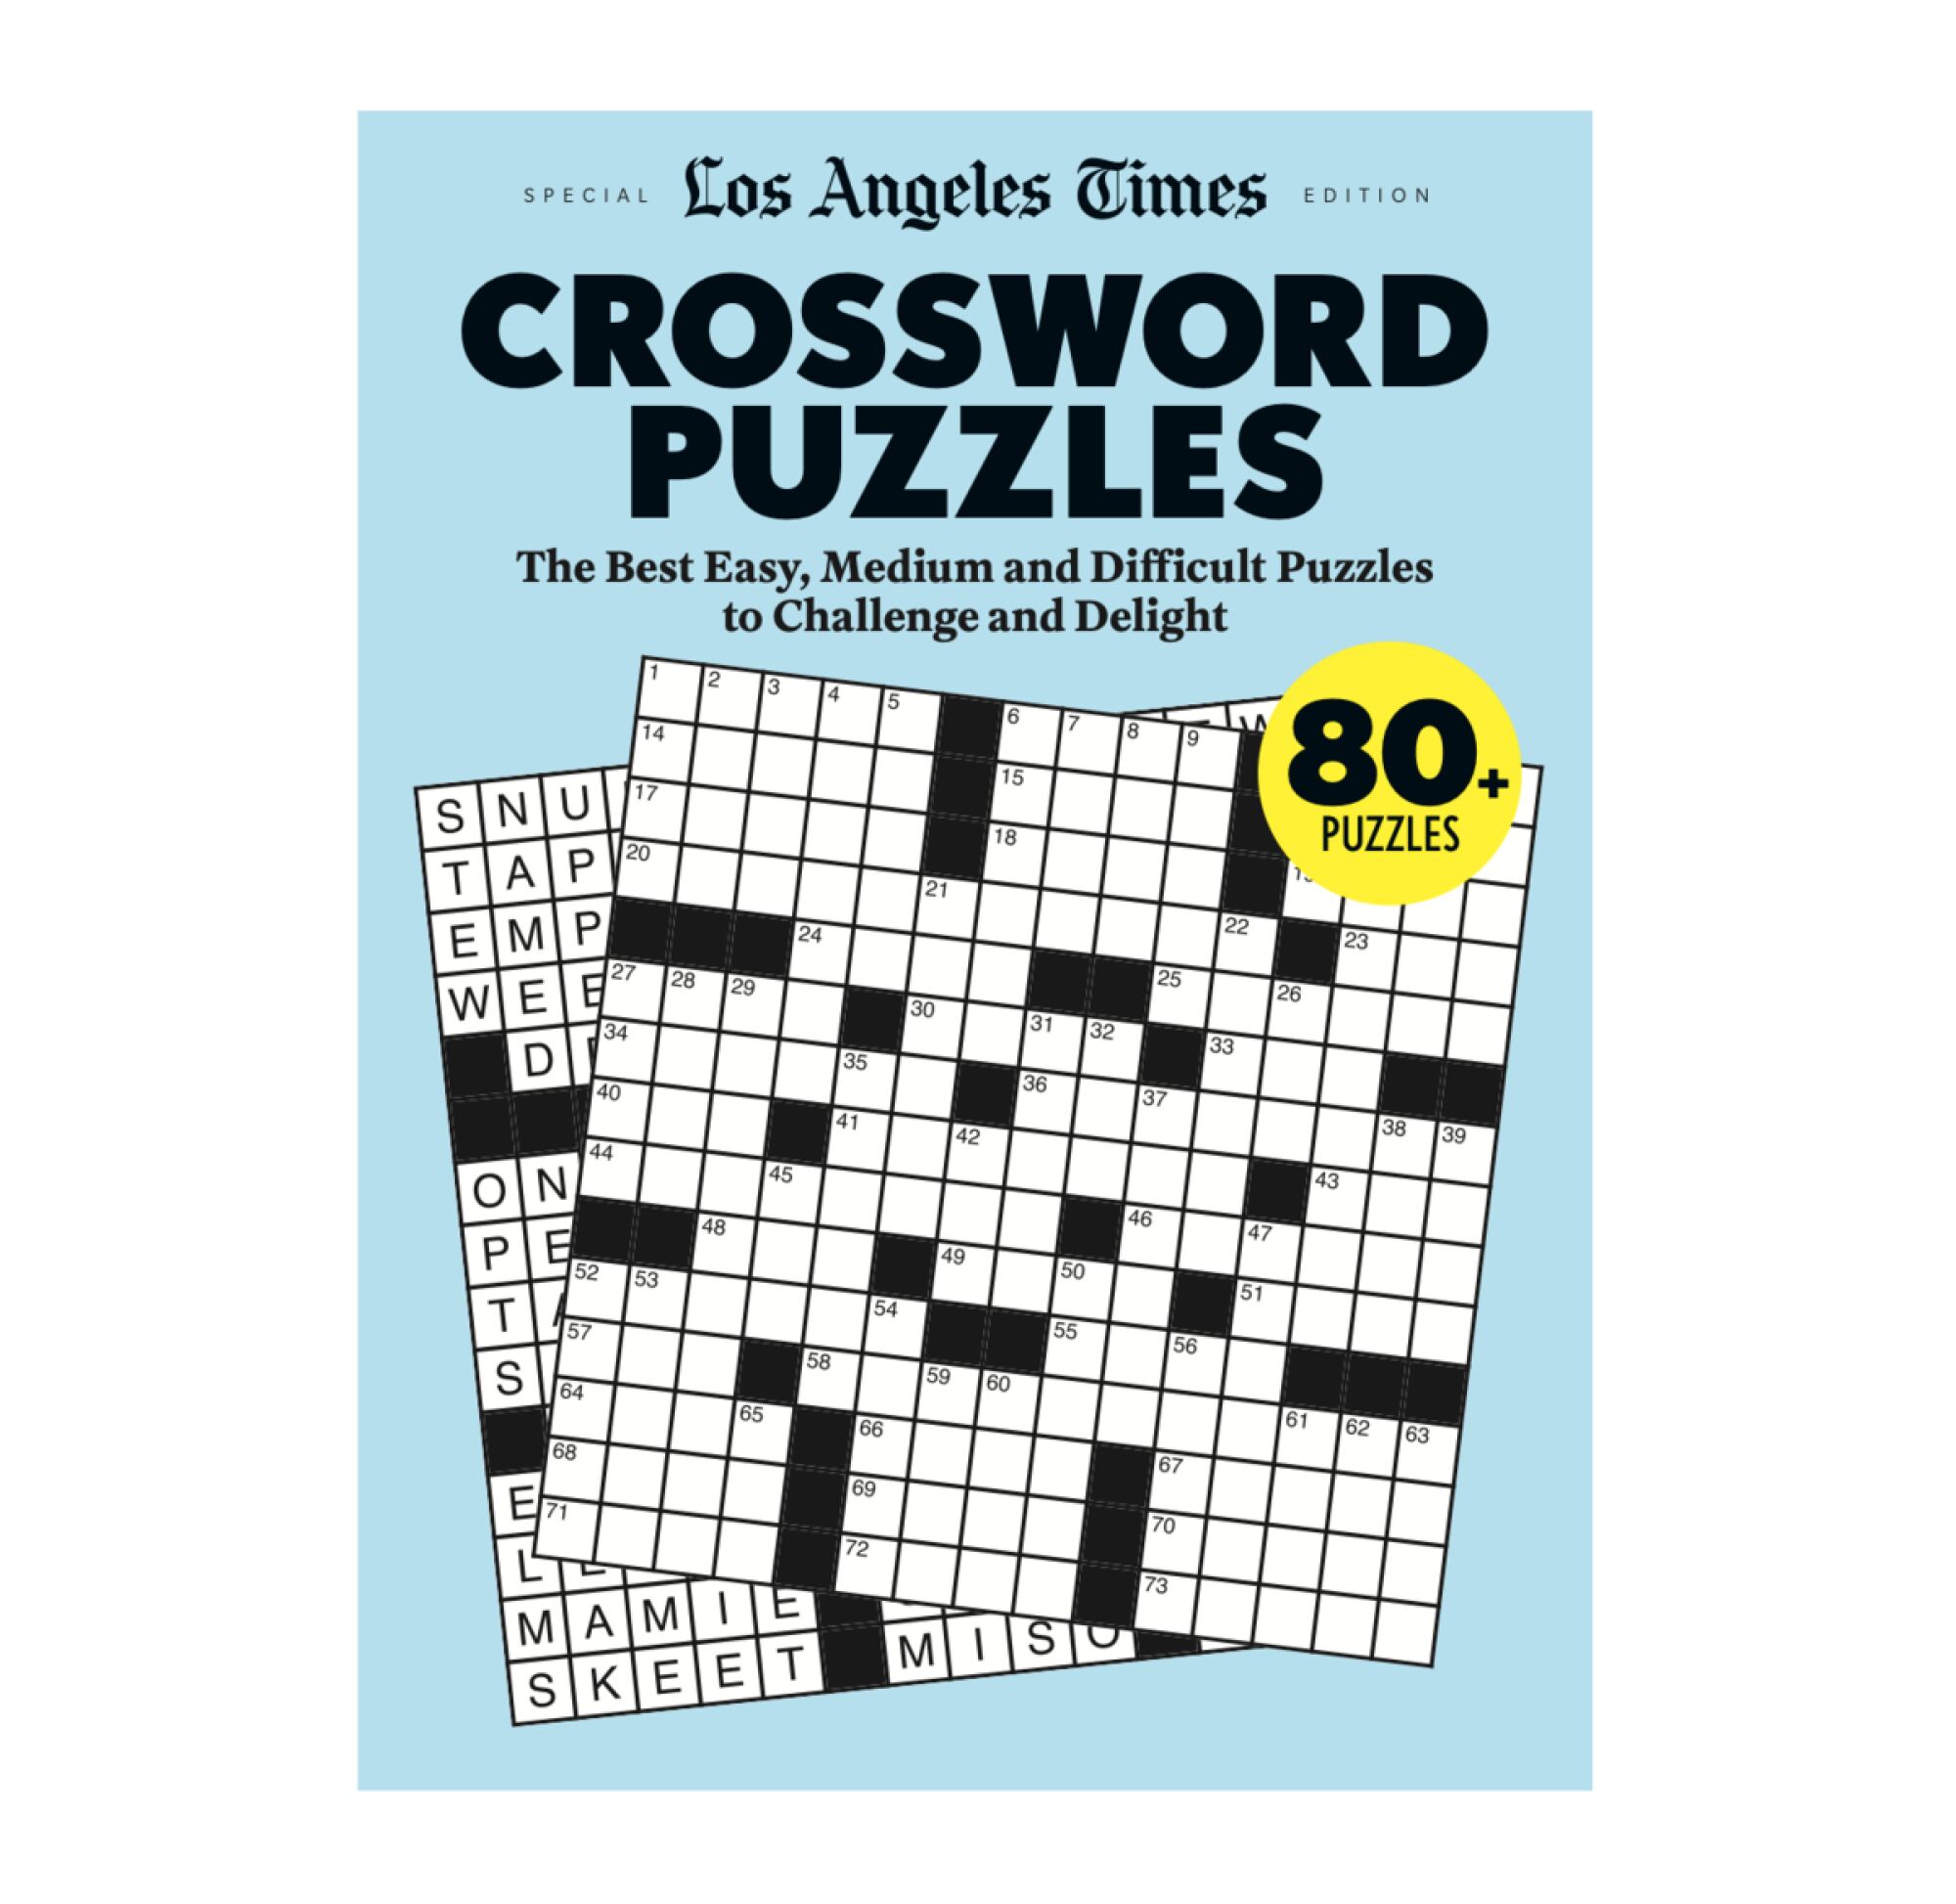 LAT crossword puzzles